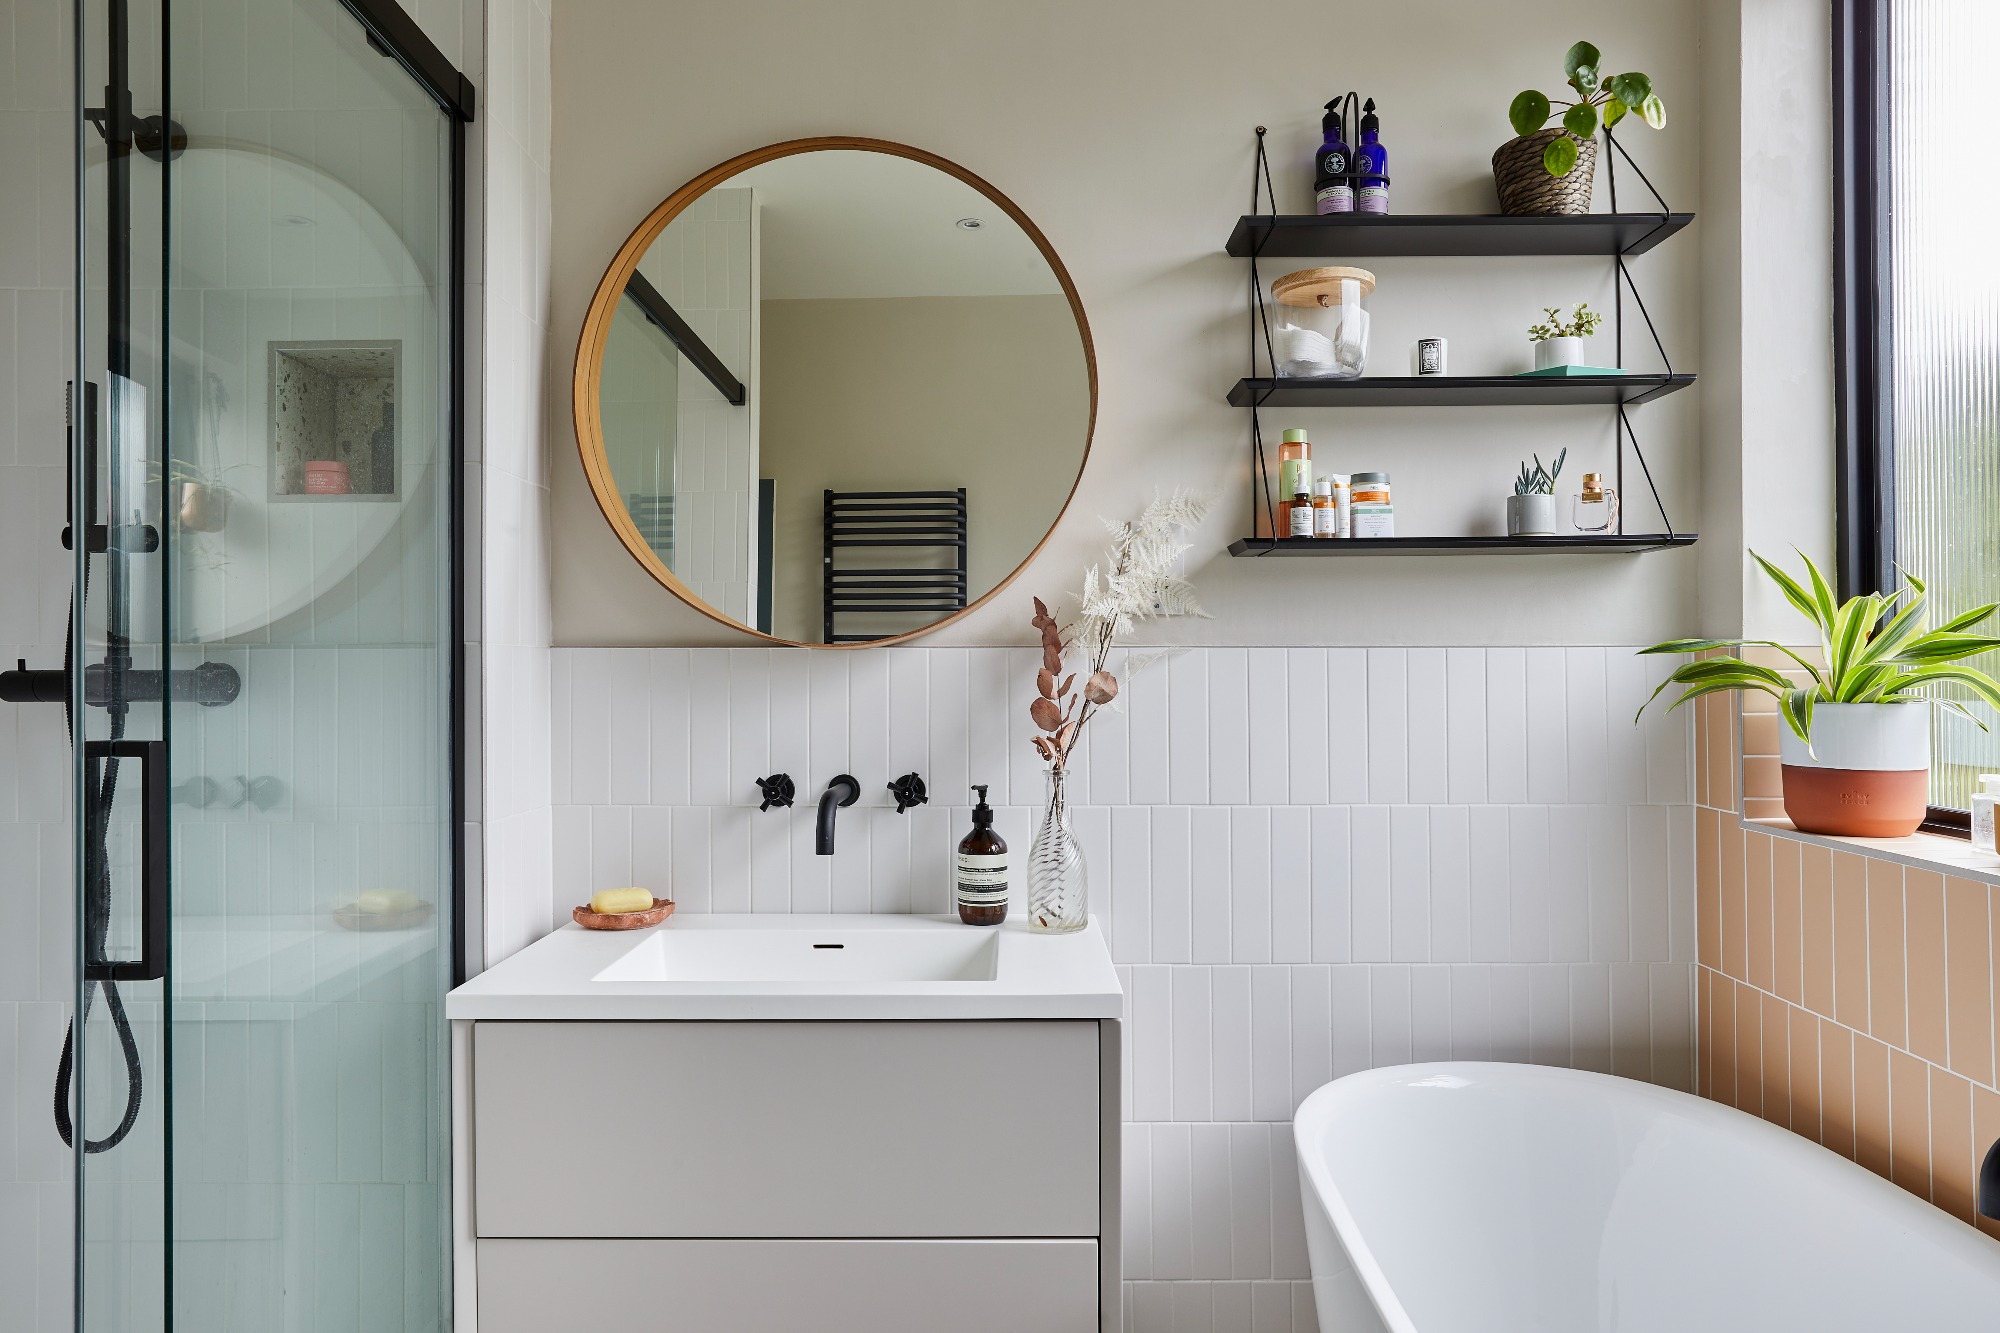 Small bathroom mirror ideas – 18 small bathroom mirror looks ...